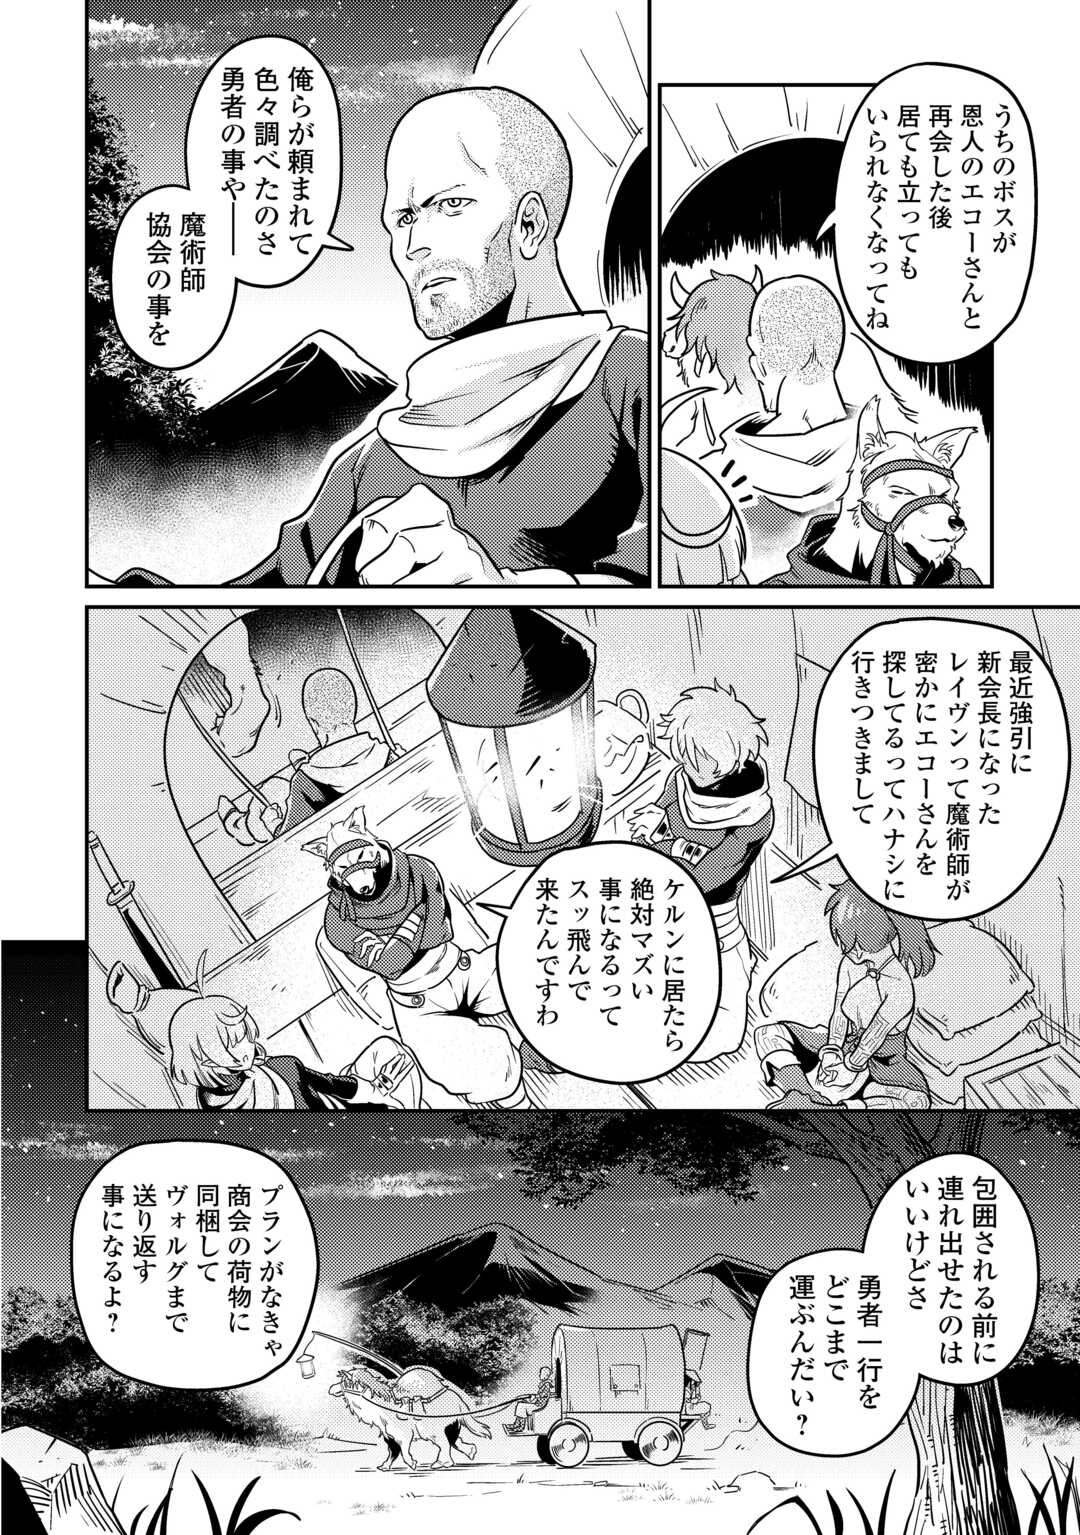 Kokkyou no Yuusha Echo - Chapter 11 - Page 30